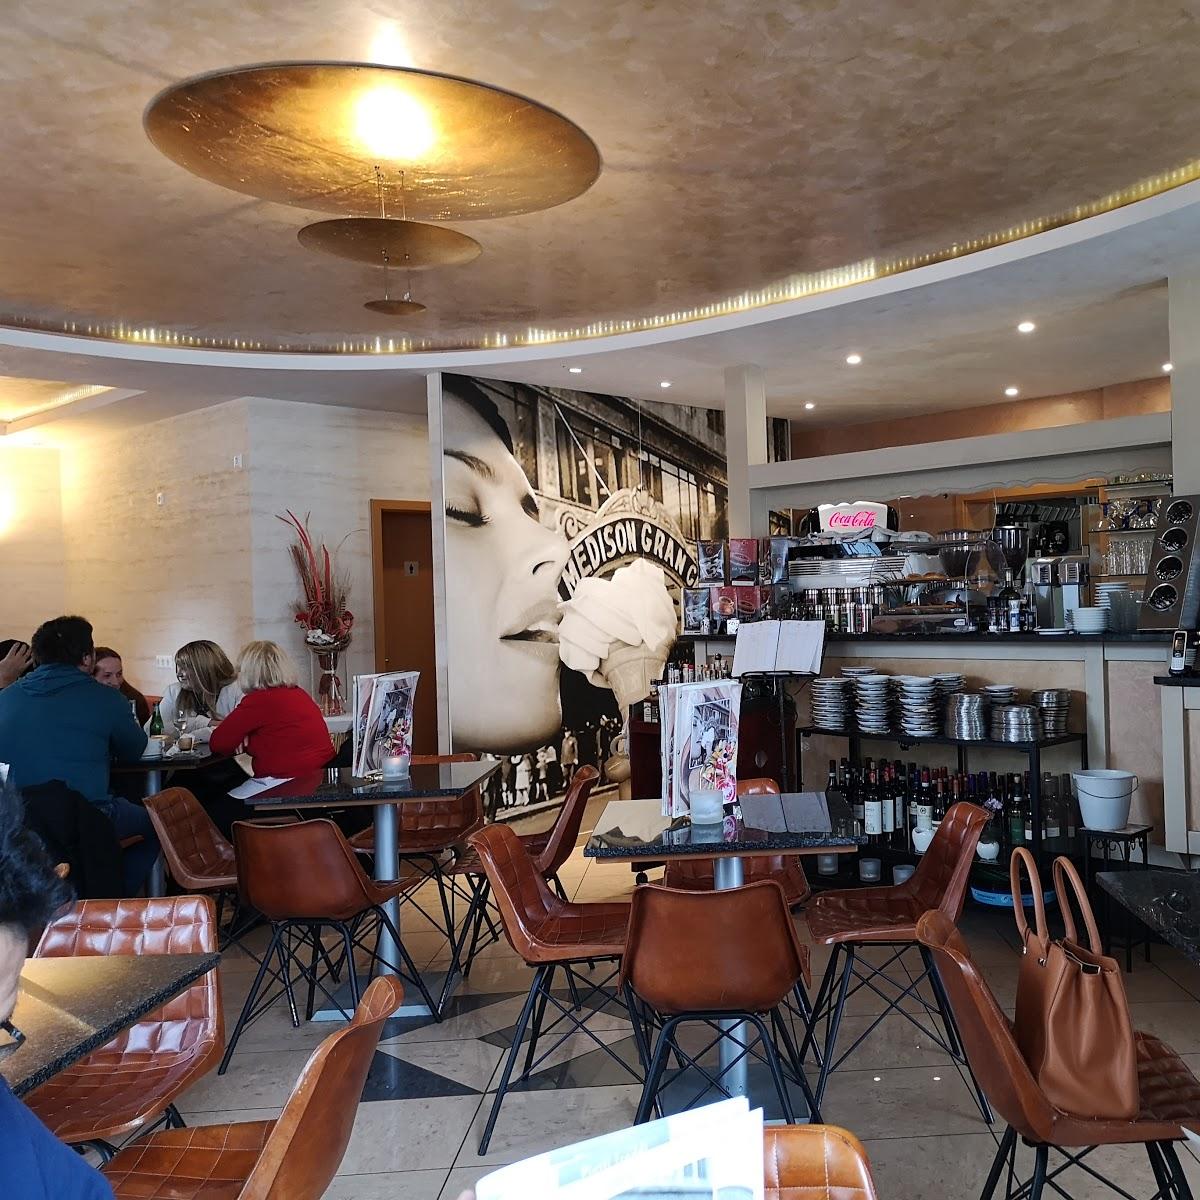 Restaurant "Café Medison" in Mosbach